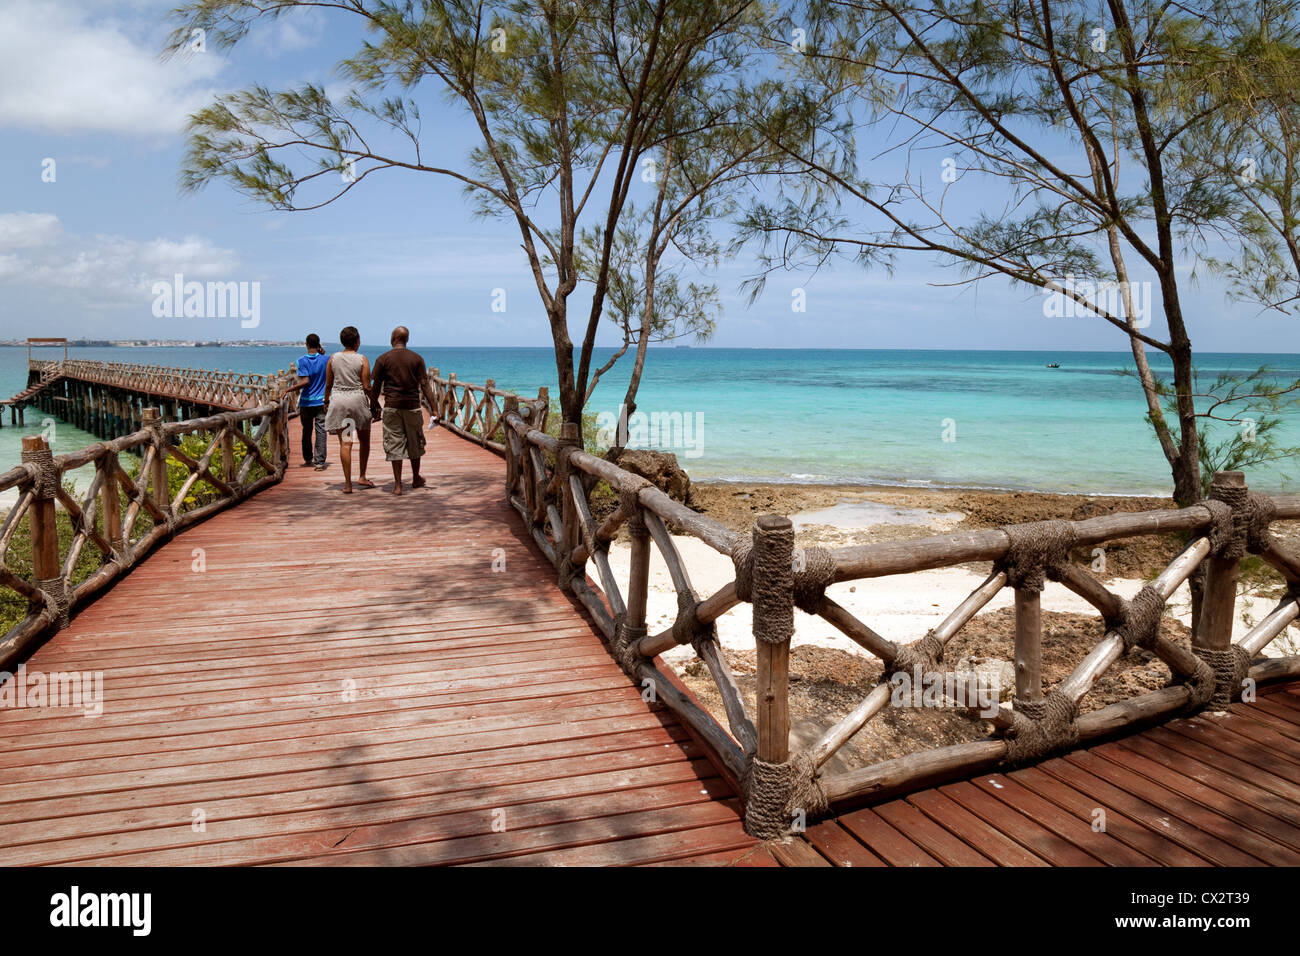 The boardwalk on Prison Island (Changuu), Zanzibar Africa Stock Photo